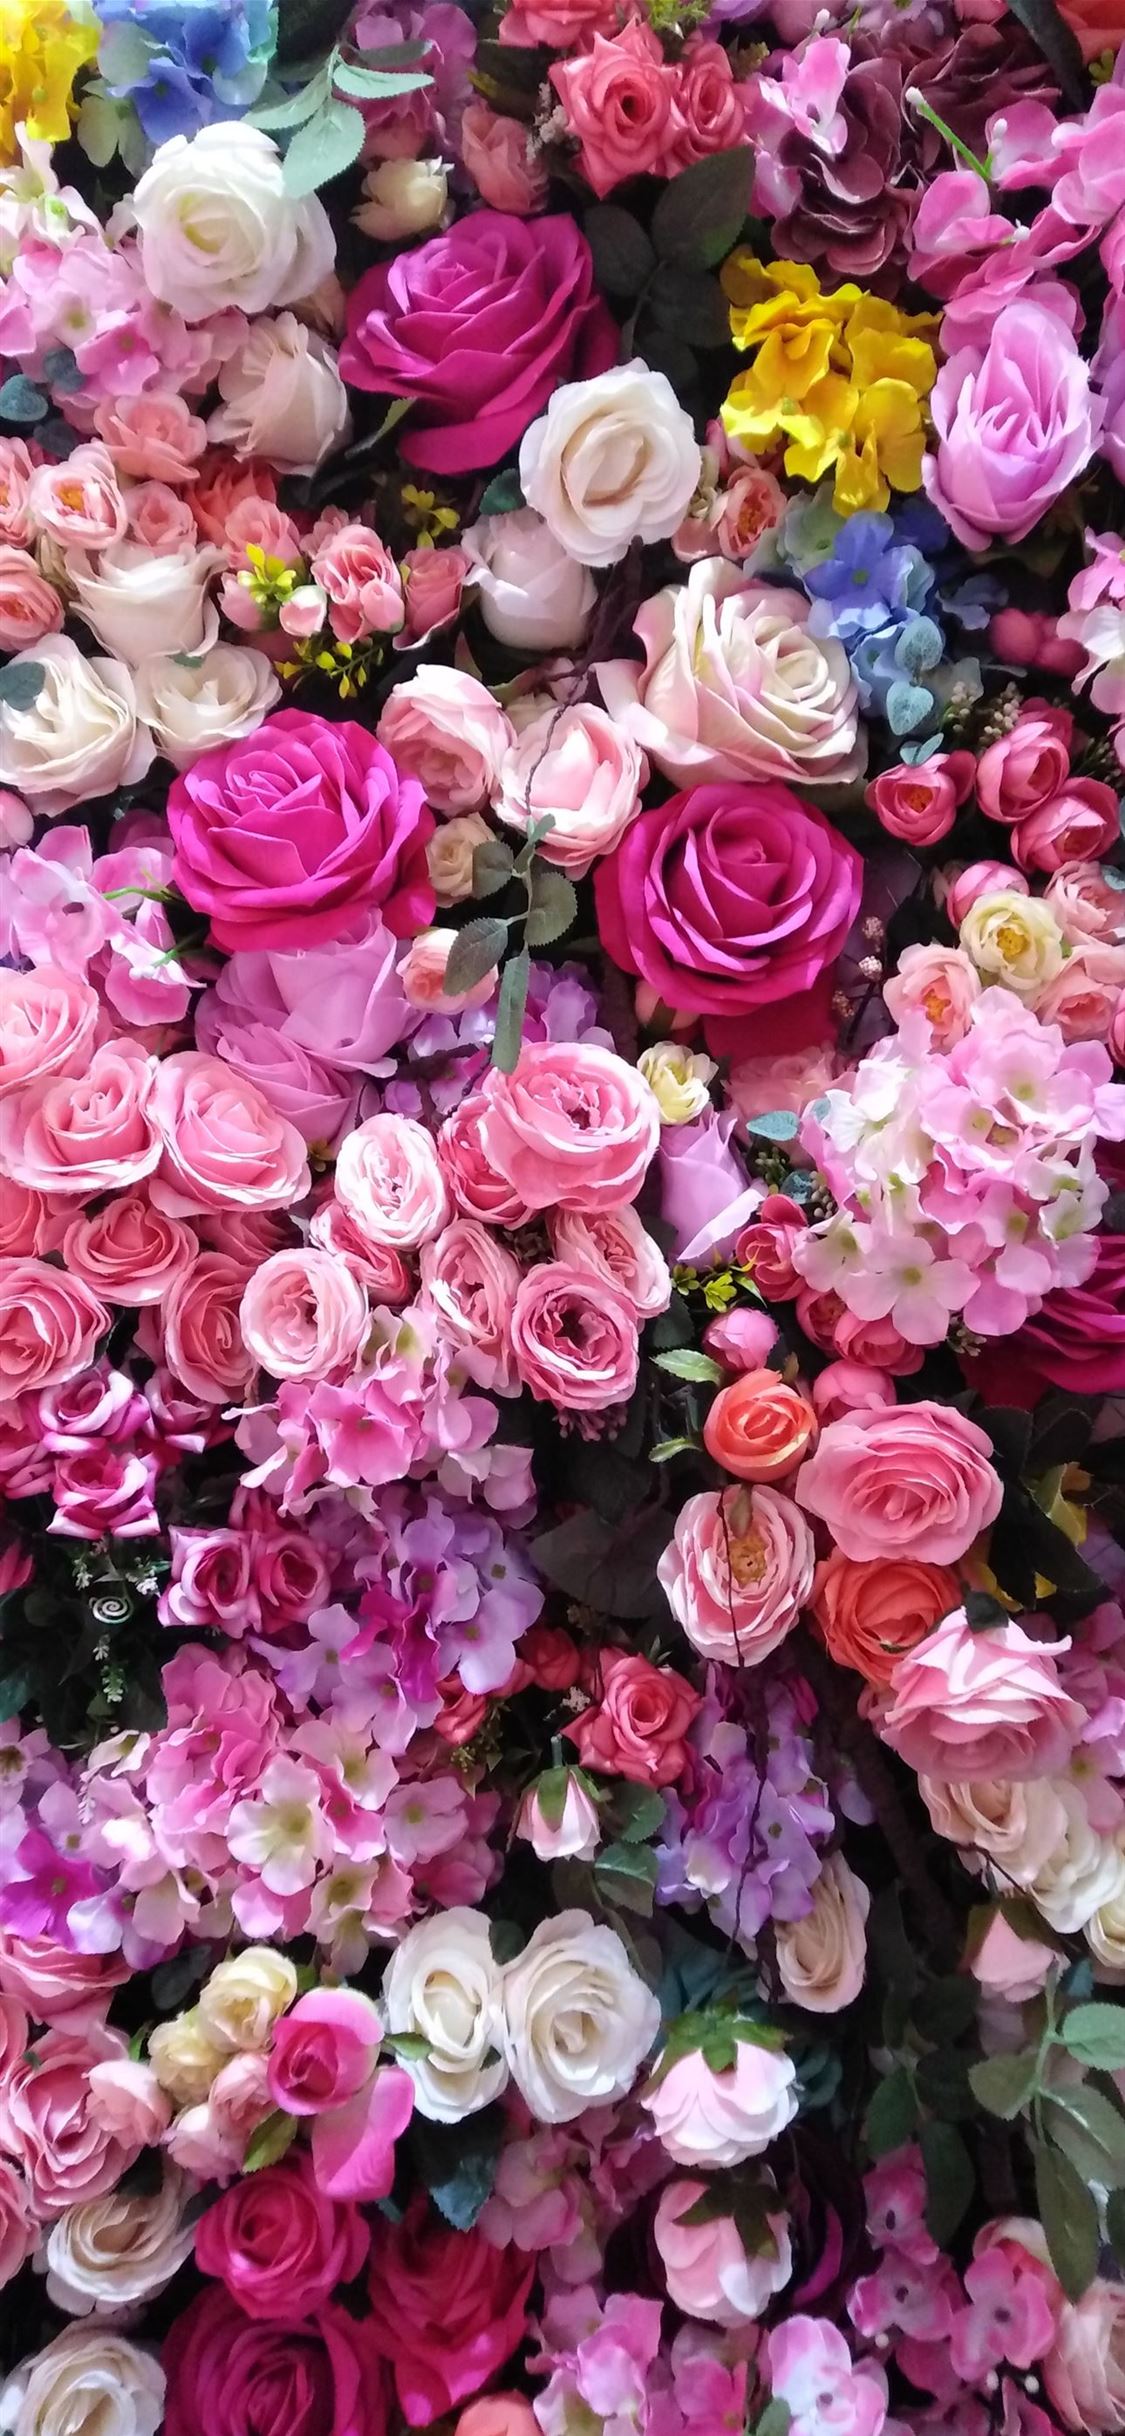 Flower Wallpaper Pictures  Download Free Images on Unsplash